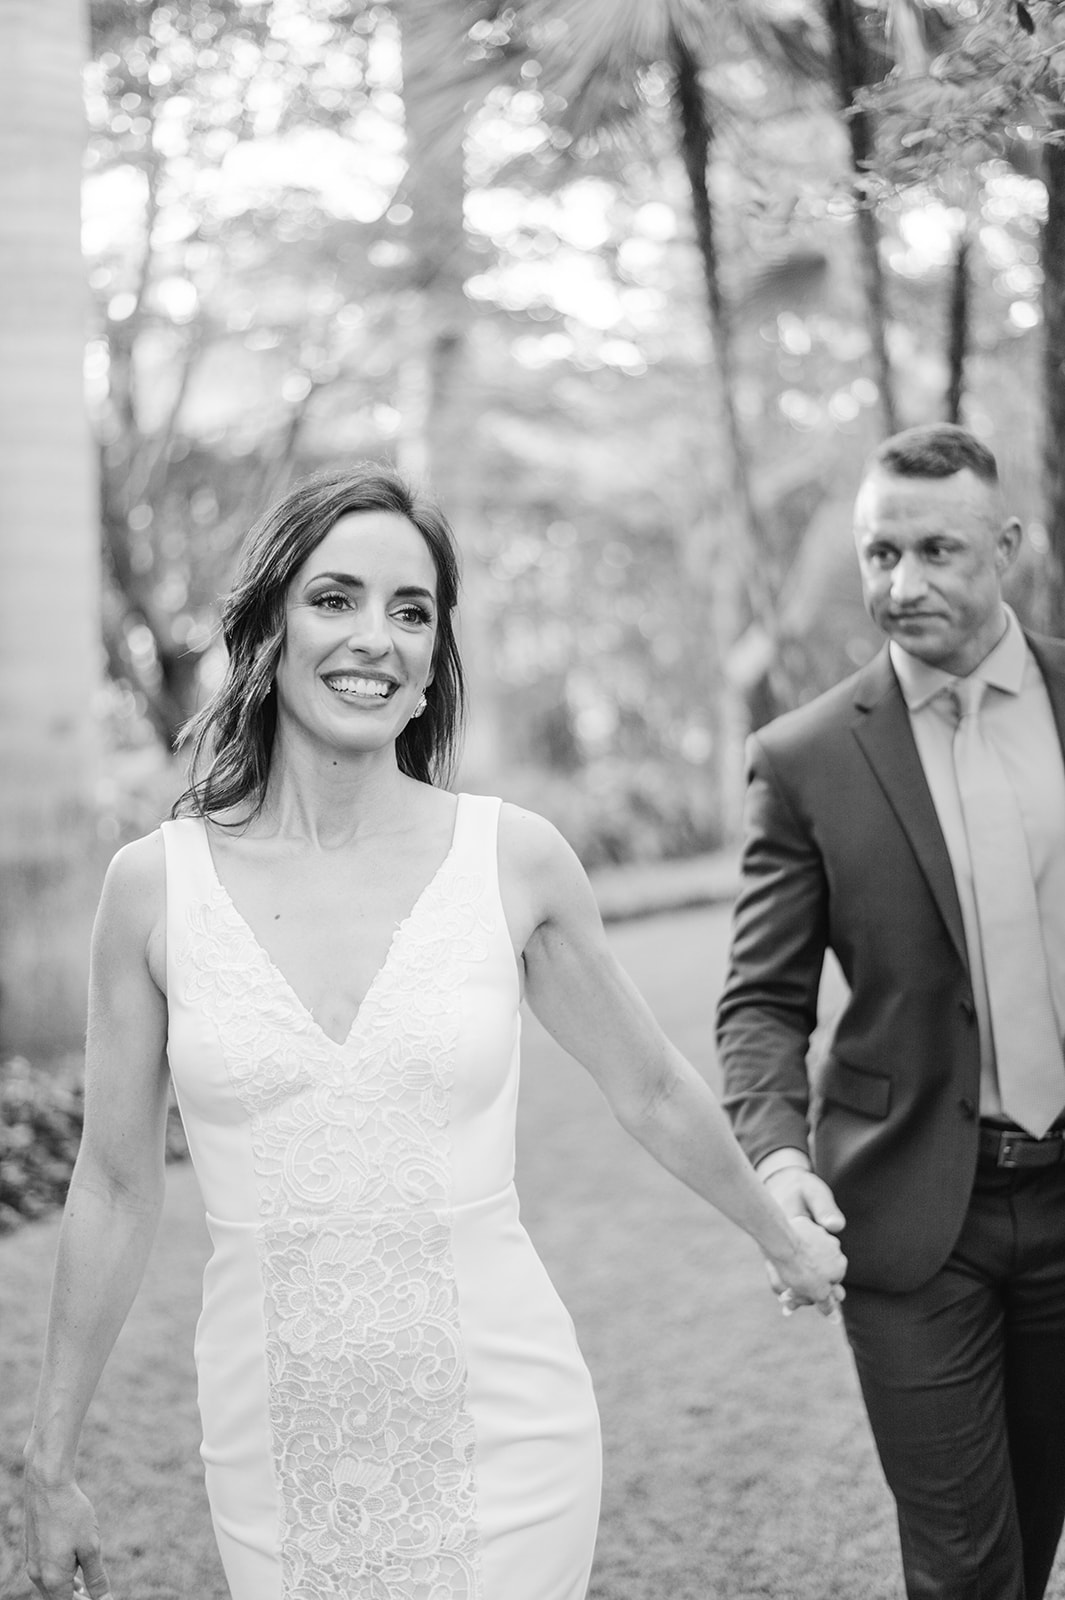 Naples Florida wedding photographer captures the bridesmaids' happiness
